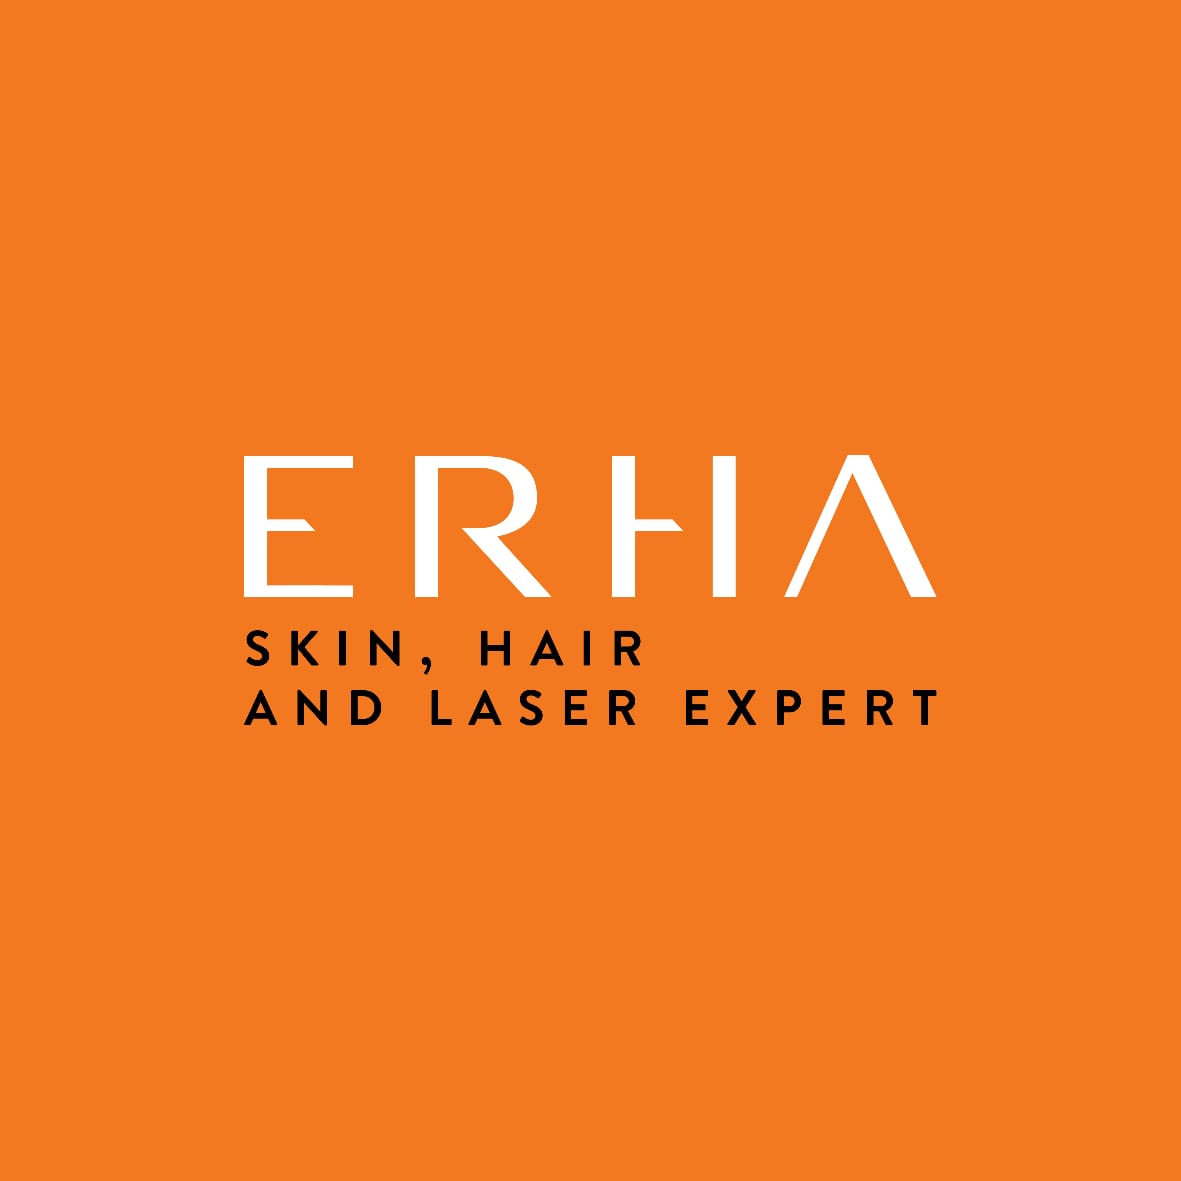 Erha Skin, Hair and Laser Expert.